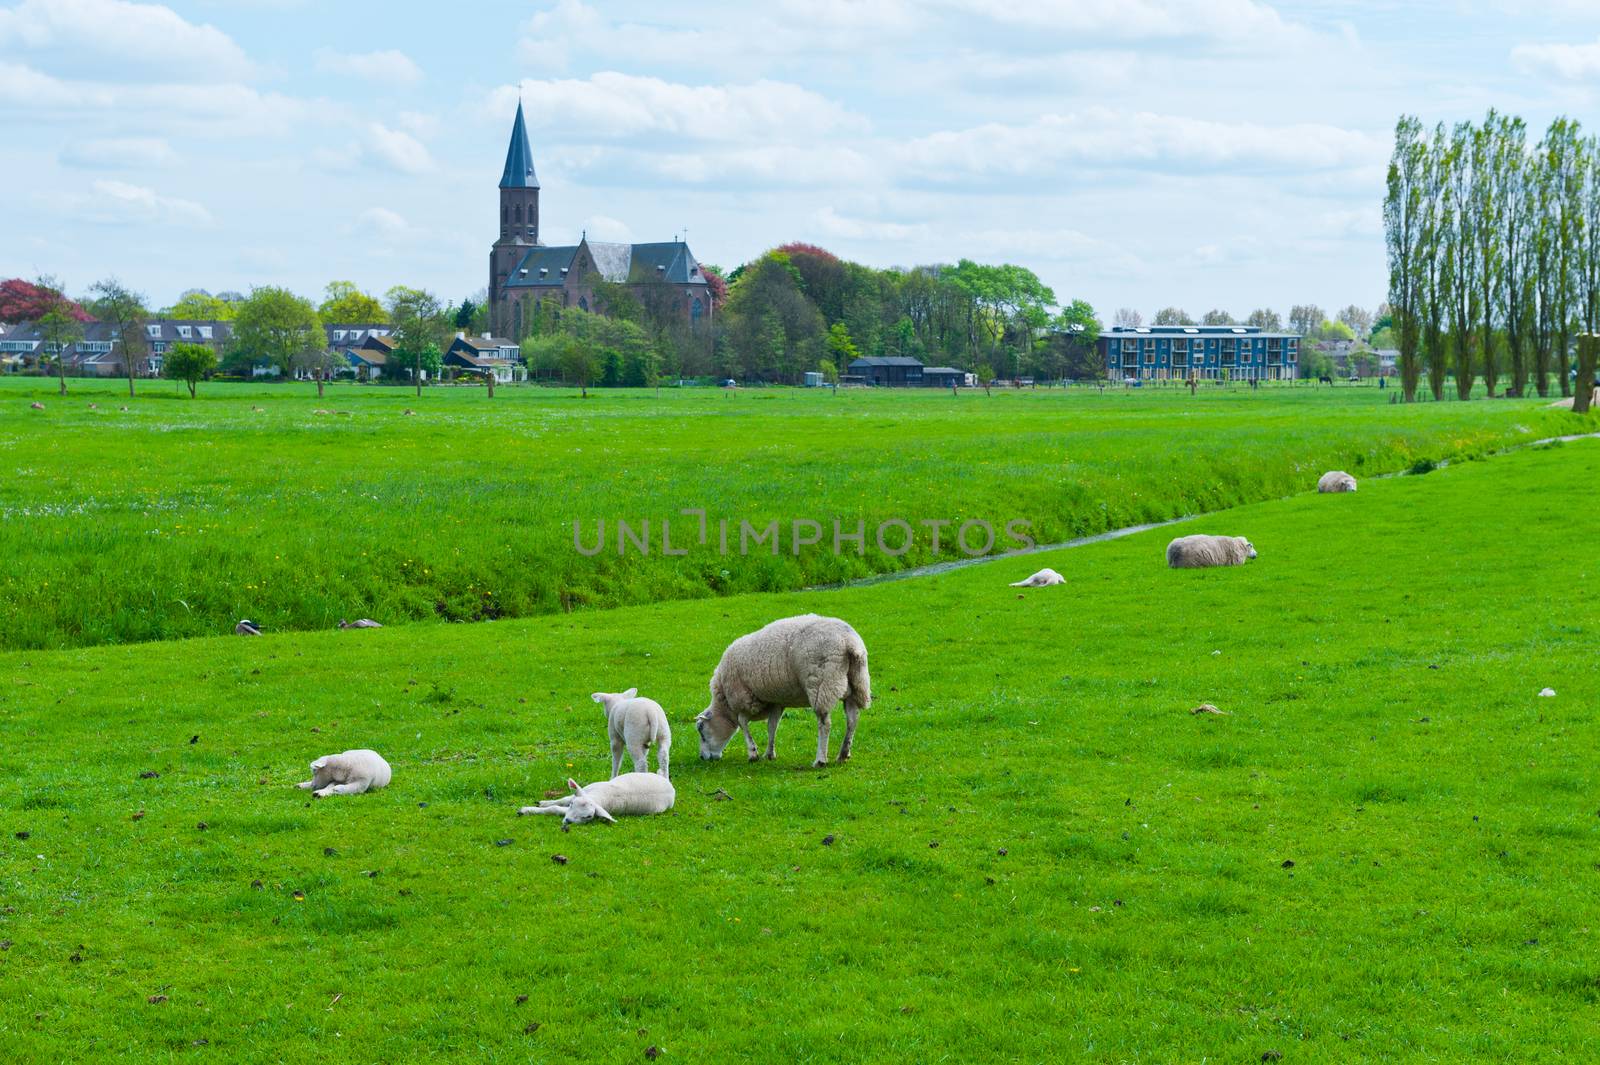 Sheep Grazing on Green Meadow near a Small Dutch Town